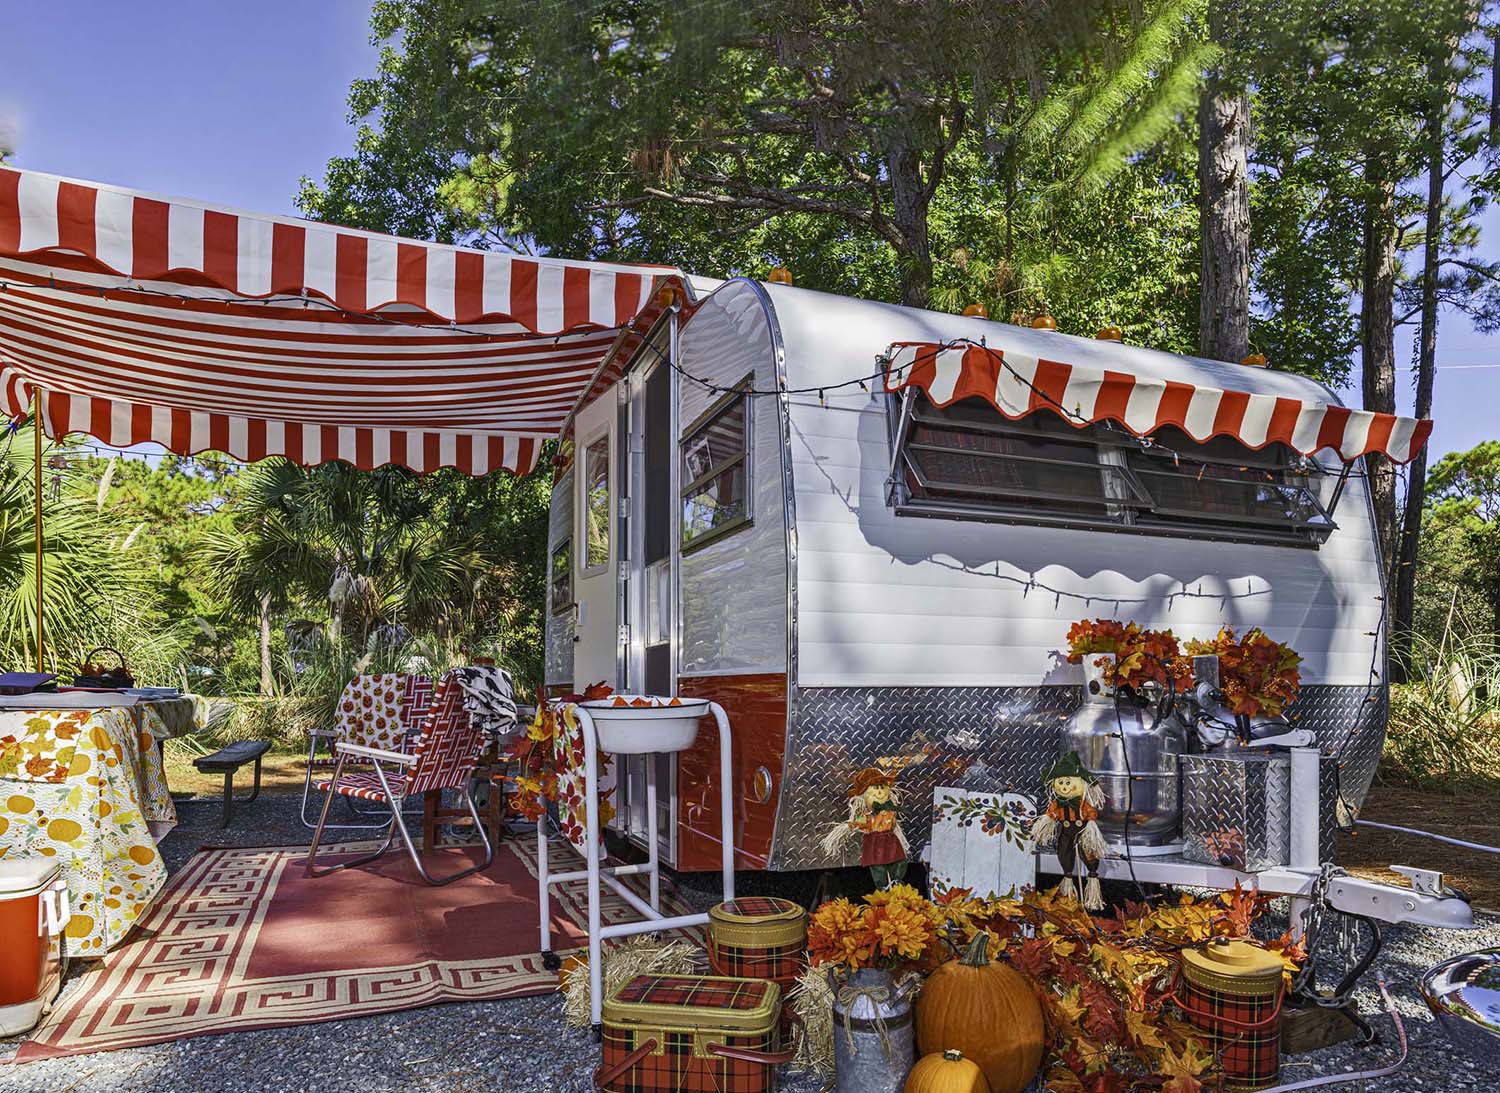 A vintage trailer festooned in autumn-Halloween decor.